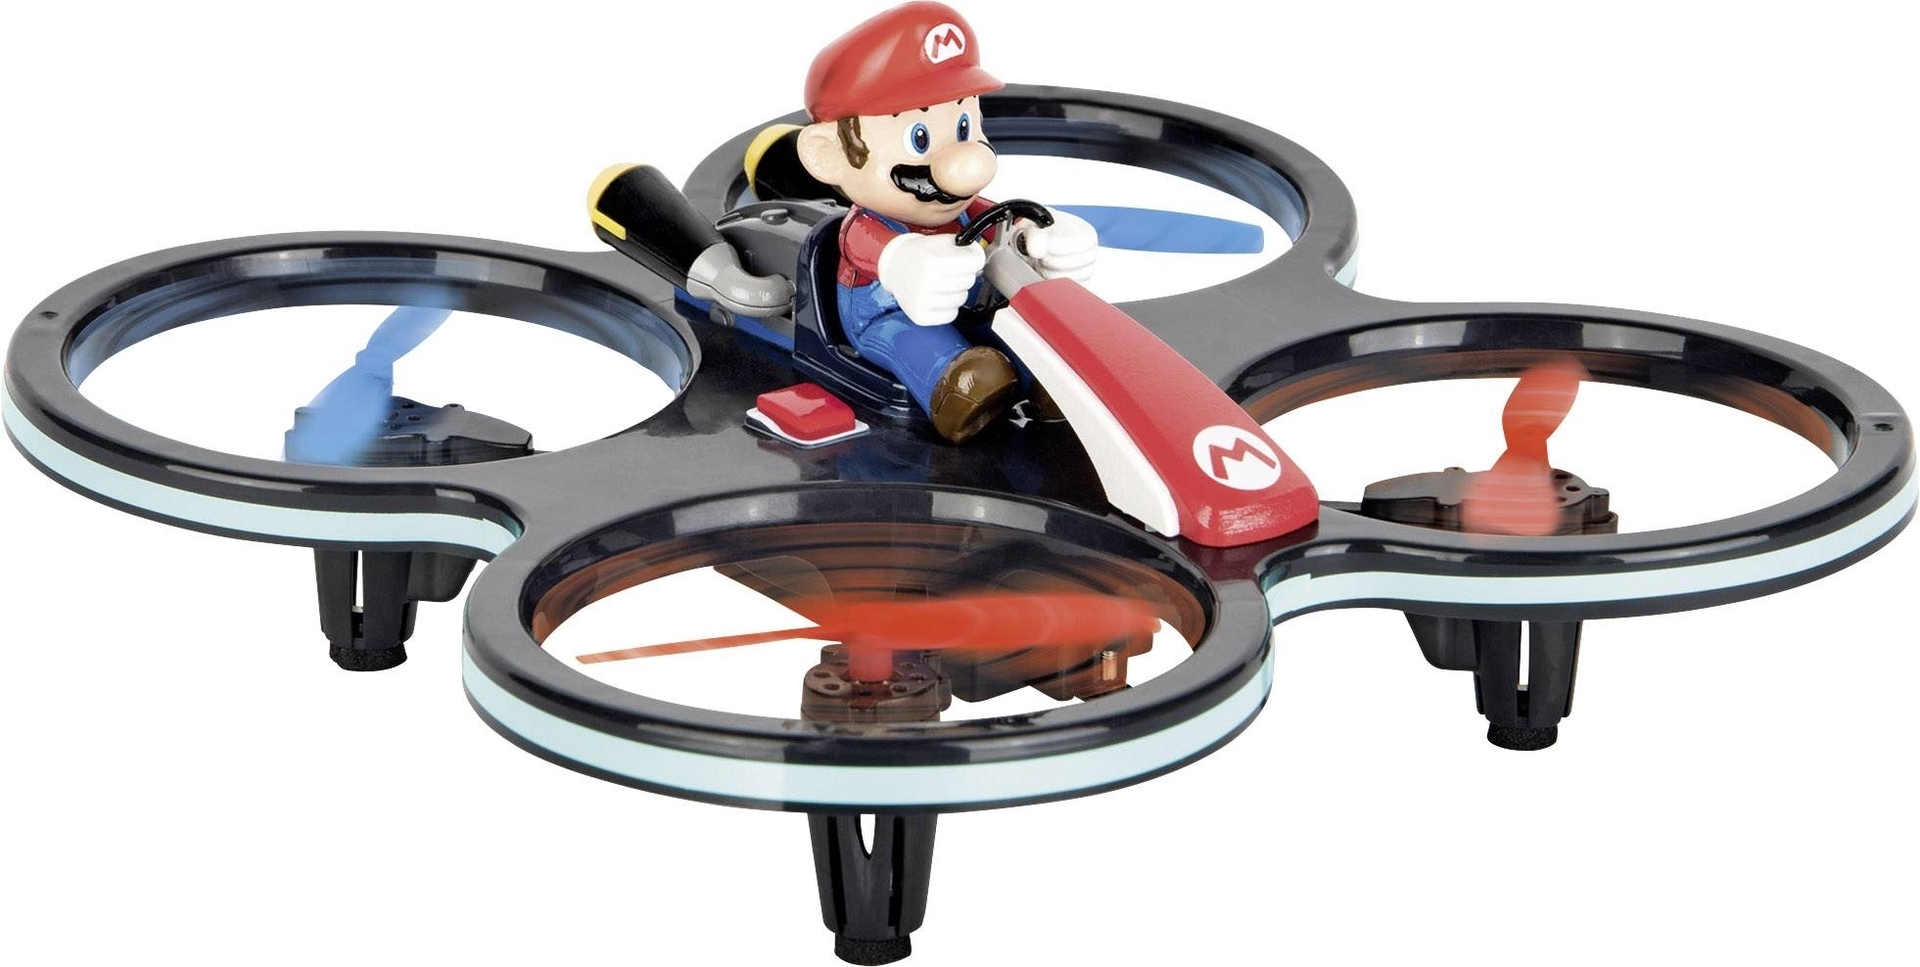 Carrera RC Nintendo Mini Mario Copter Quadcopter, Toys for children